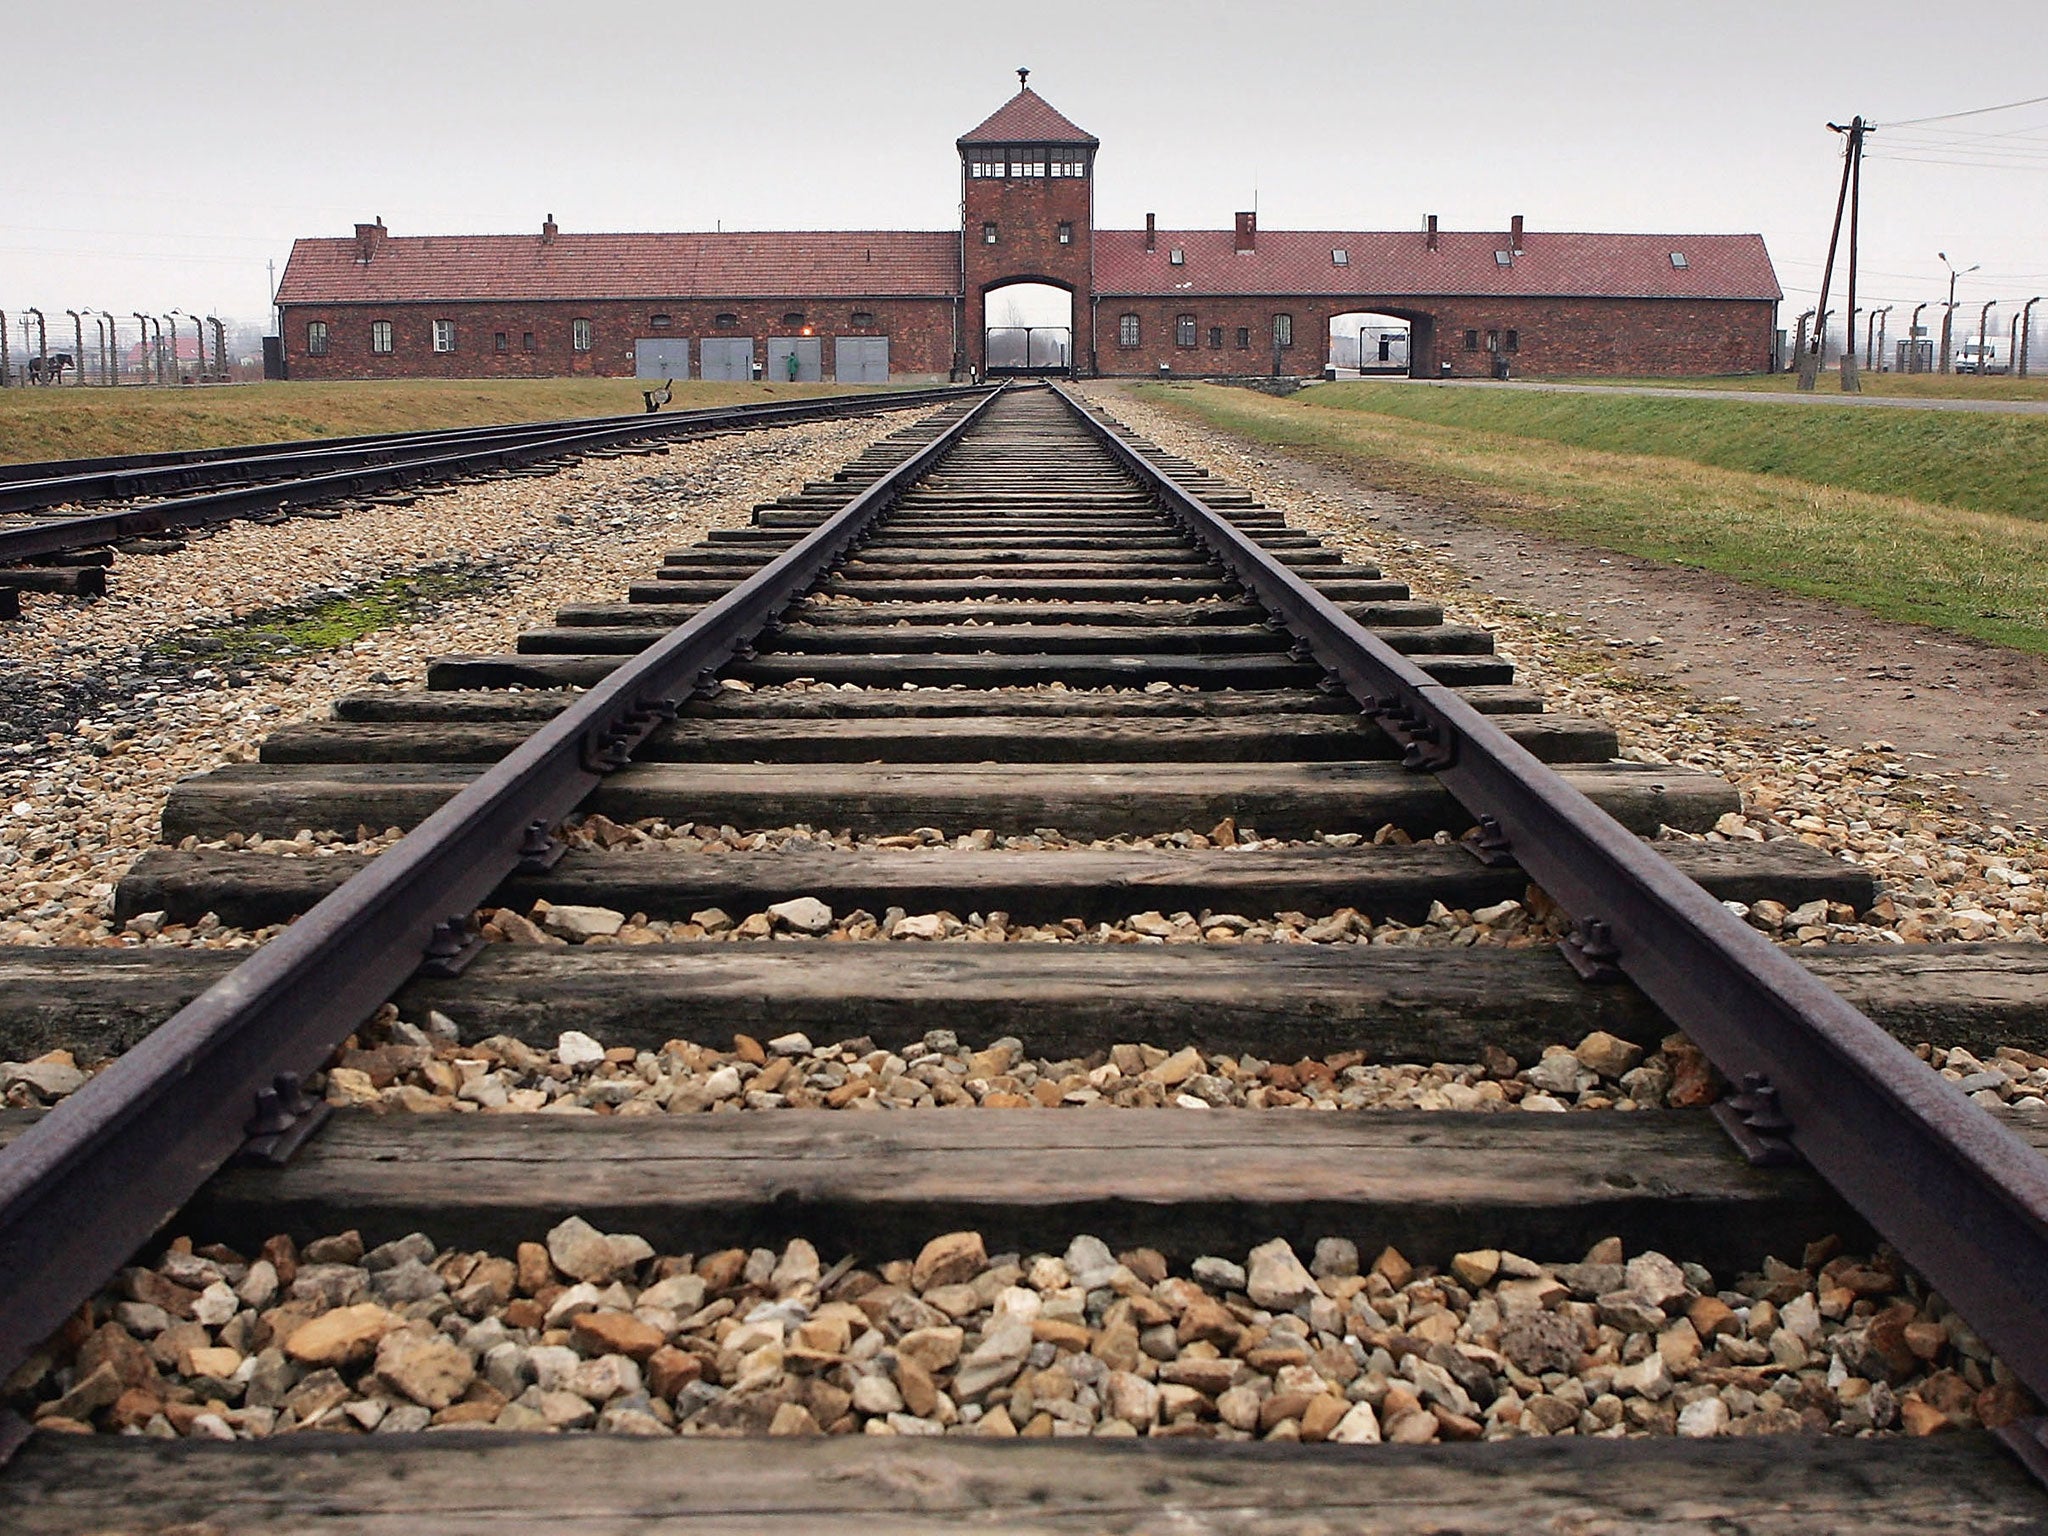 The railway tracks leading to the main gates at Auschwitz - Birkenau